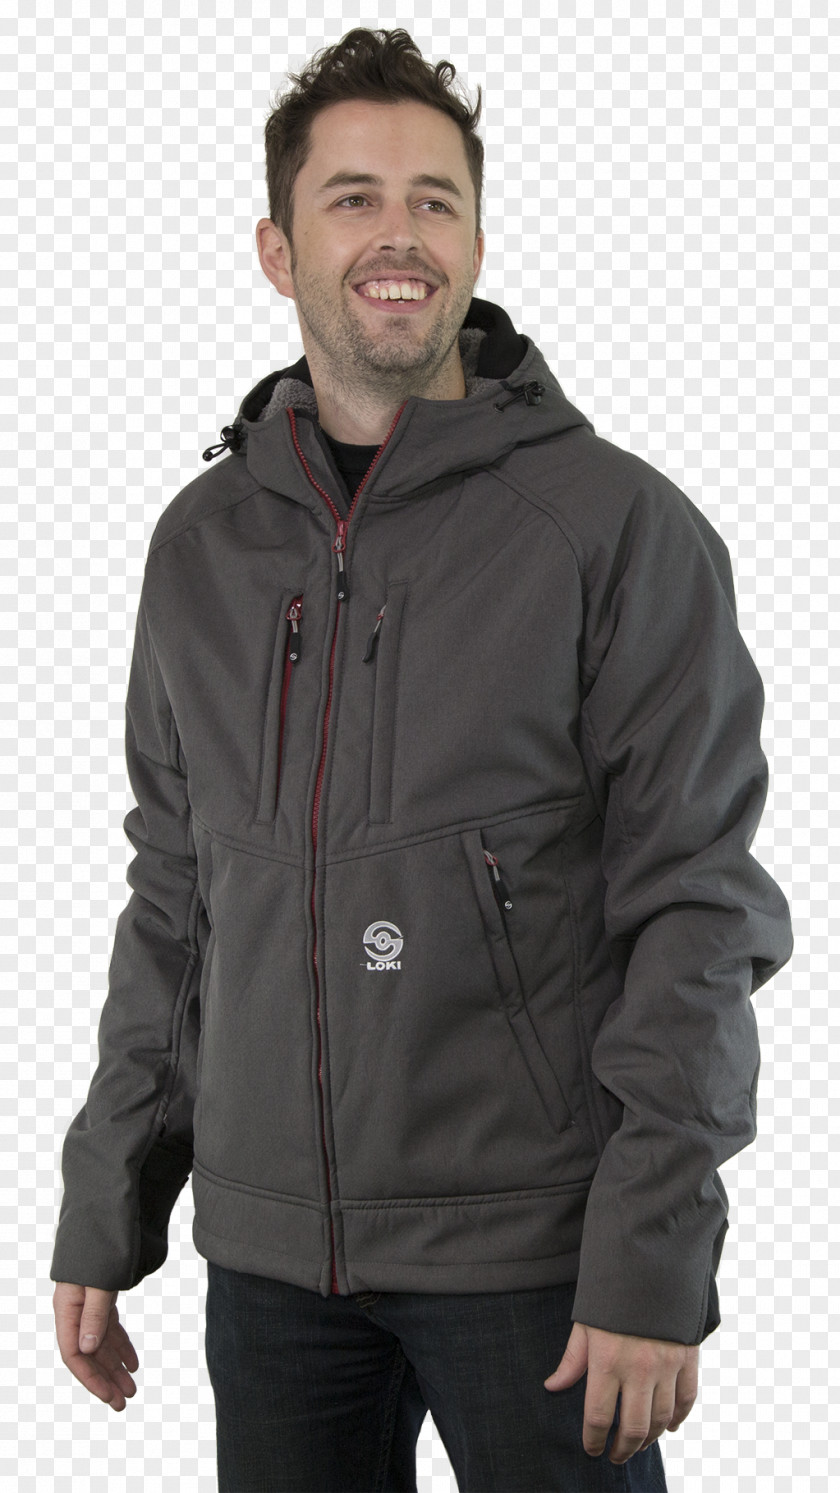 Mountain Man T-shirt Jacket Tracksuit Clothing PNG